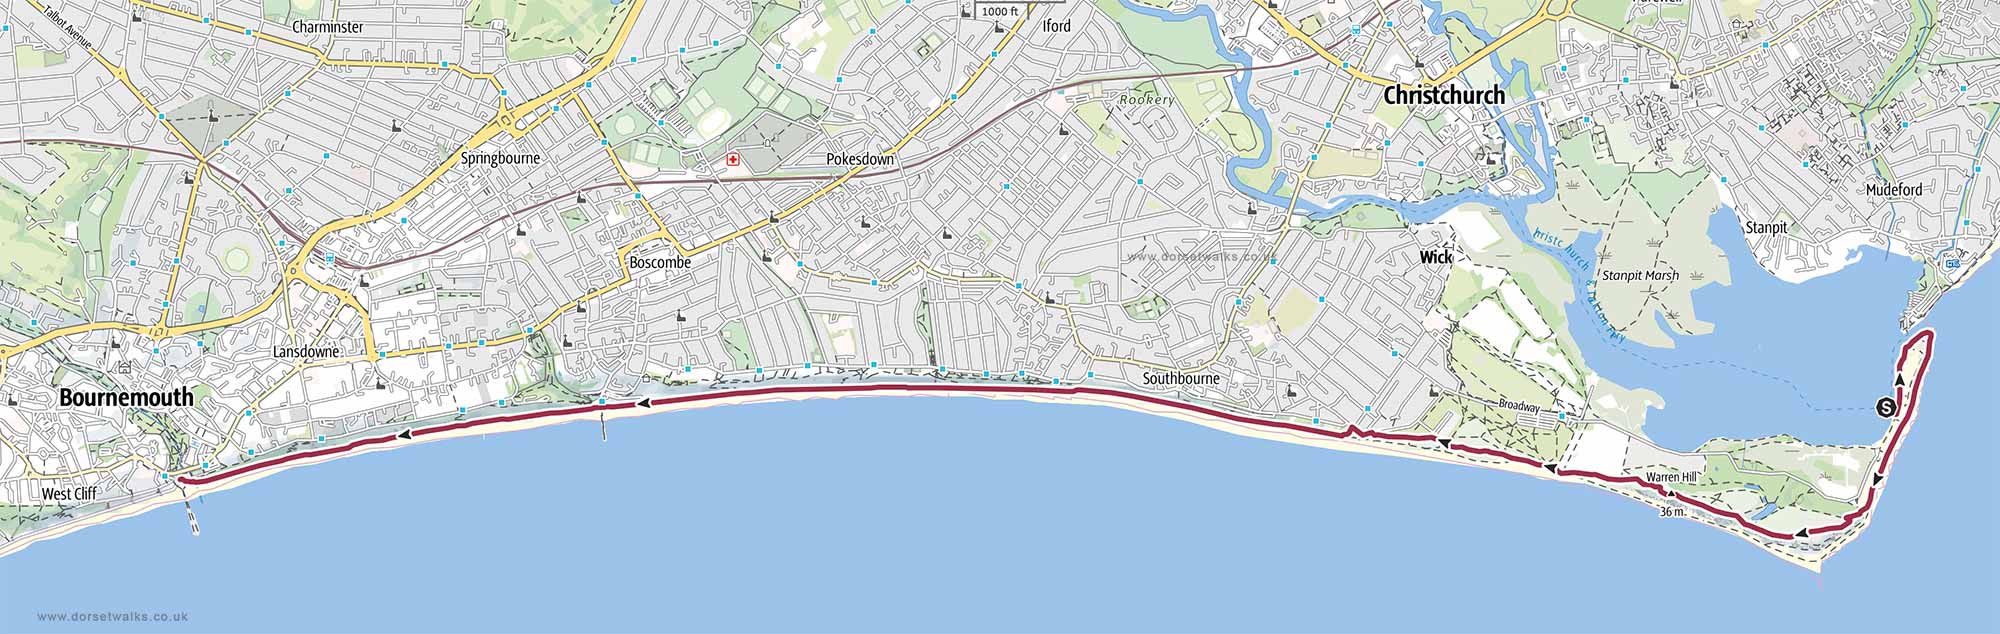 Mudeford Sandbank to Bournemouth Pier Walk Map 7 miles one-way